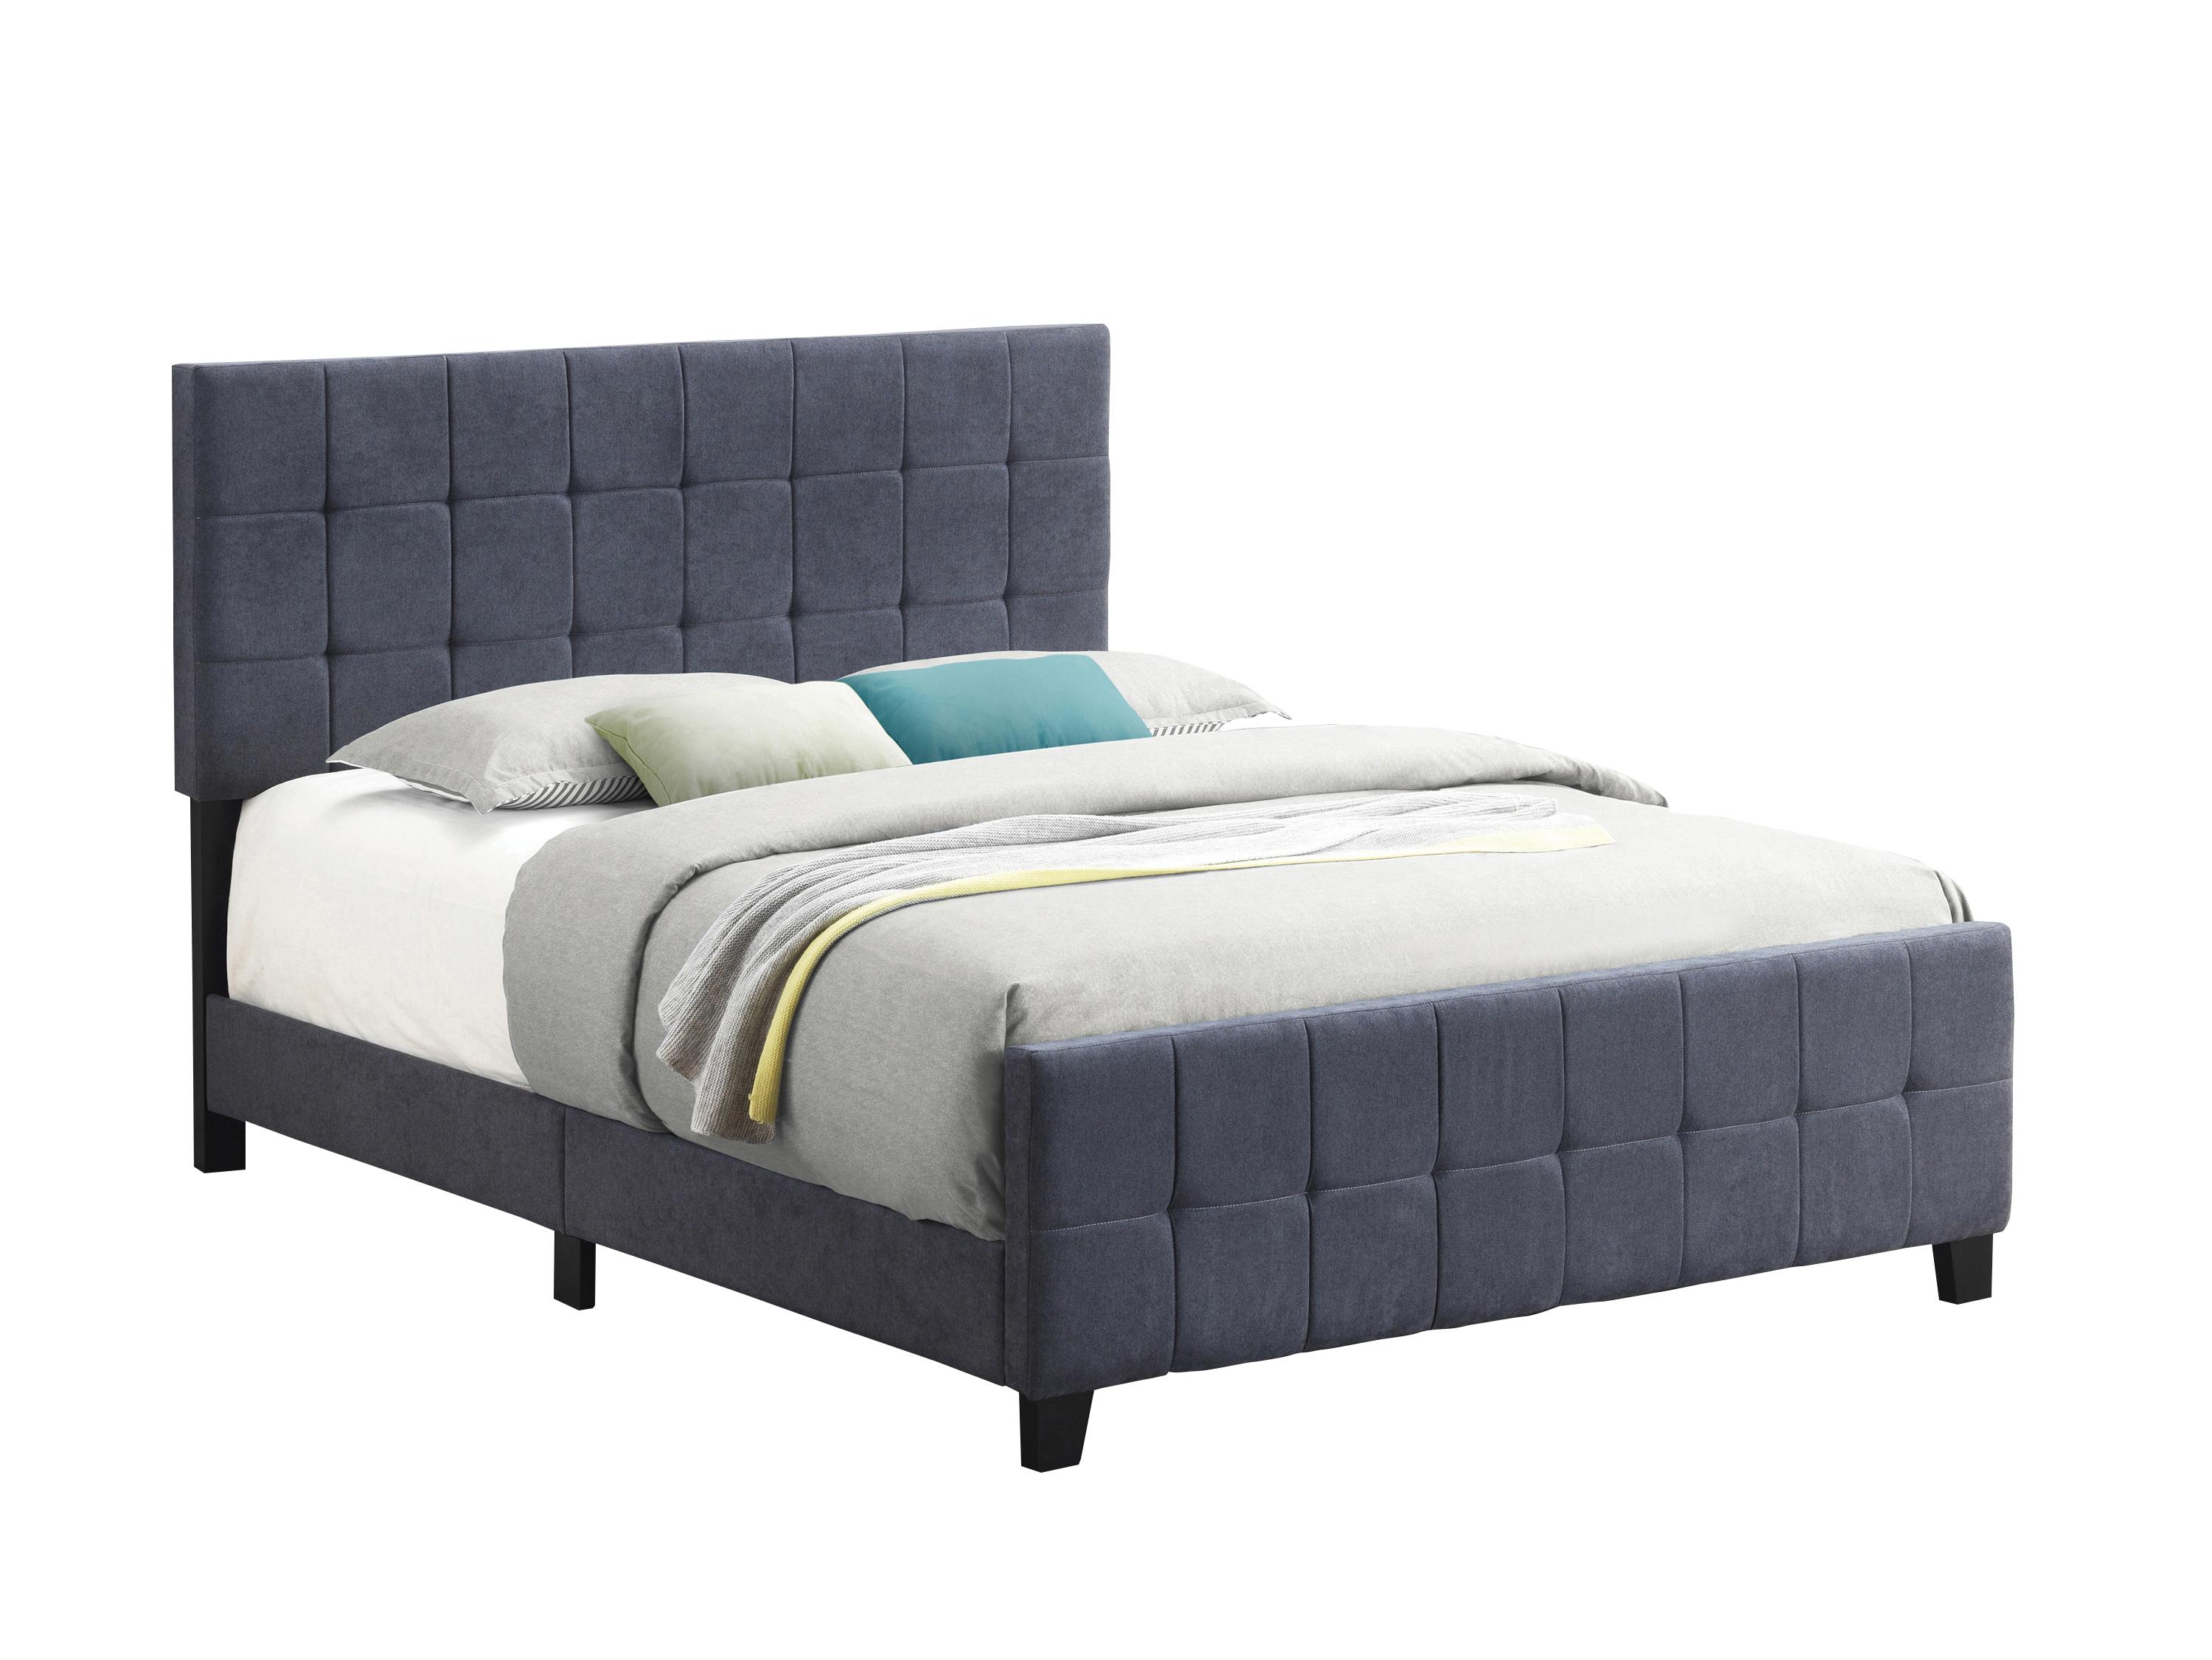 Contemporary Bed 305953Q Fairfield 305953Q in Dark Gray Fabric